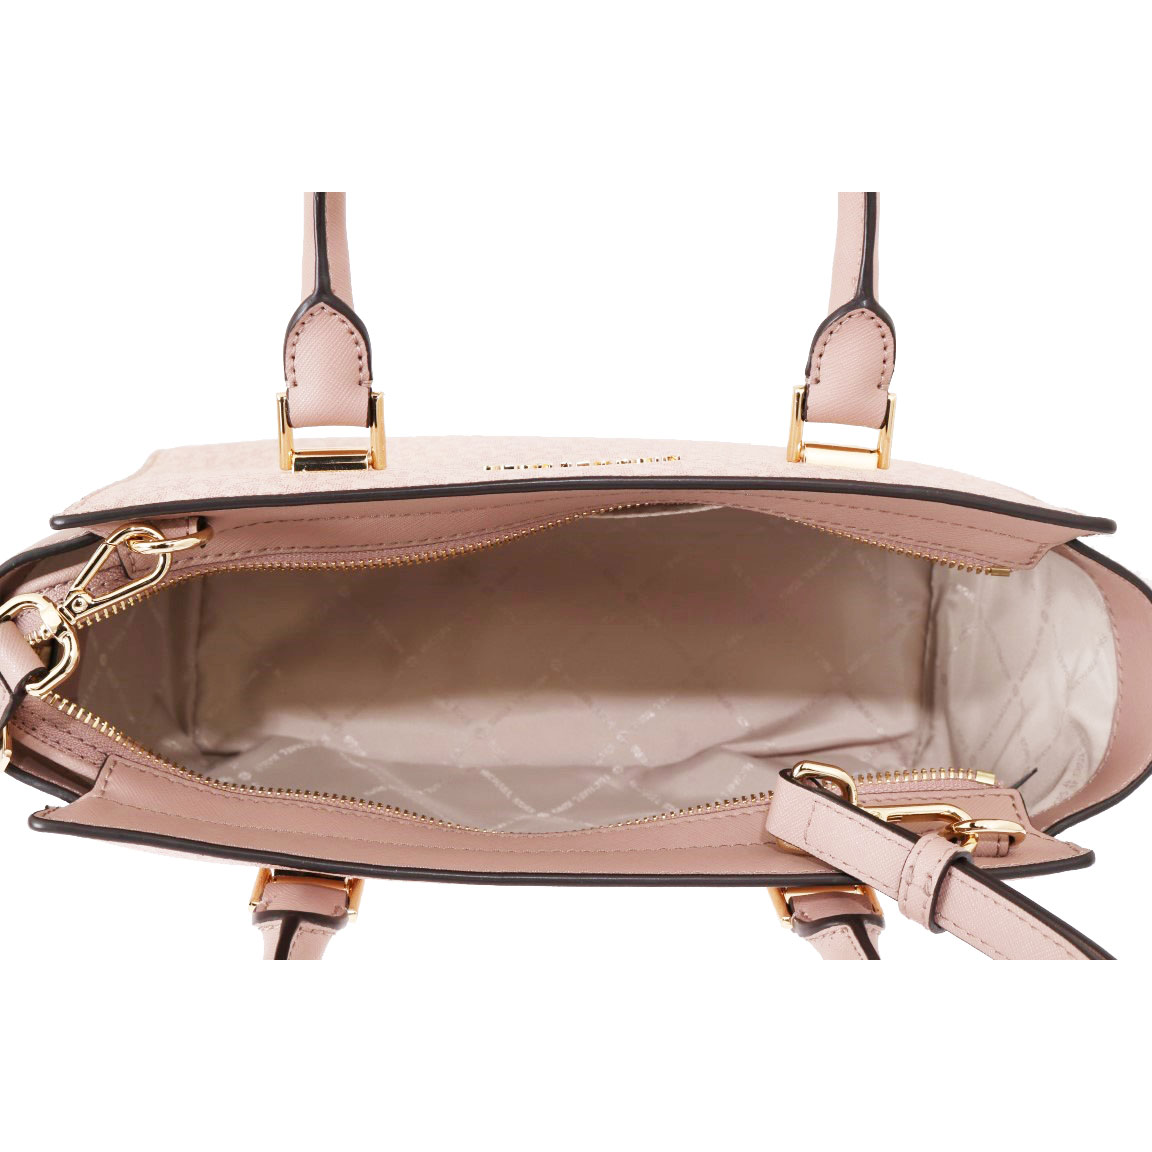 Michael Kors Crossbody Bag With Gift Bag Selma Medium Top Zip Satchel Ballet Pink # 35H8GLMS6B